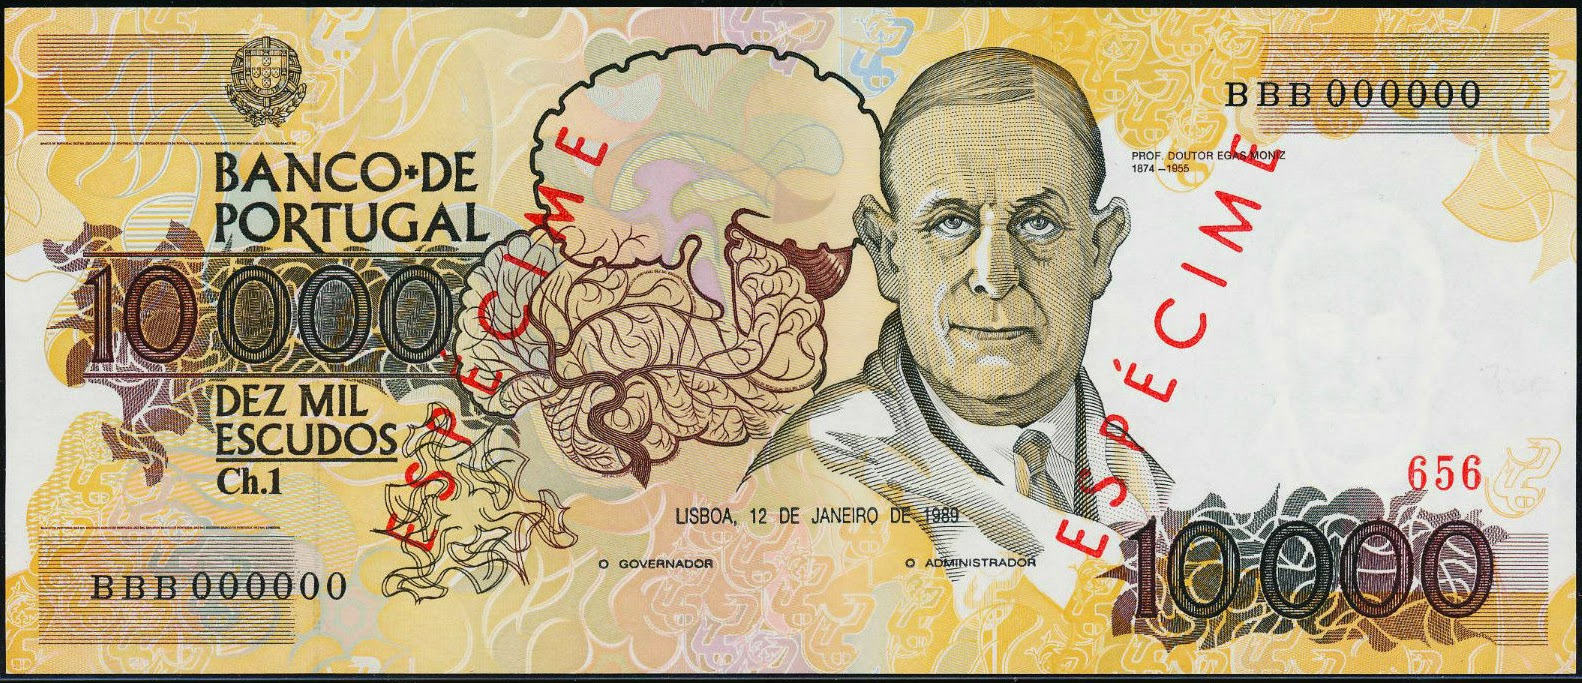 Portugal Banknotes 10000 Escudos banknote 1989 Professor Egas Moniz winner of the Nobel Prize in Physiology or Medicine